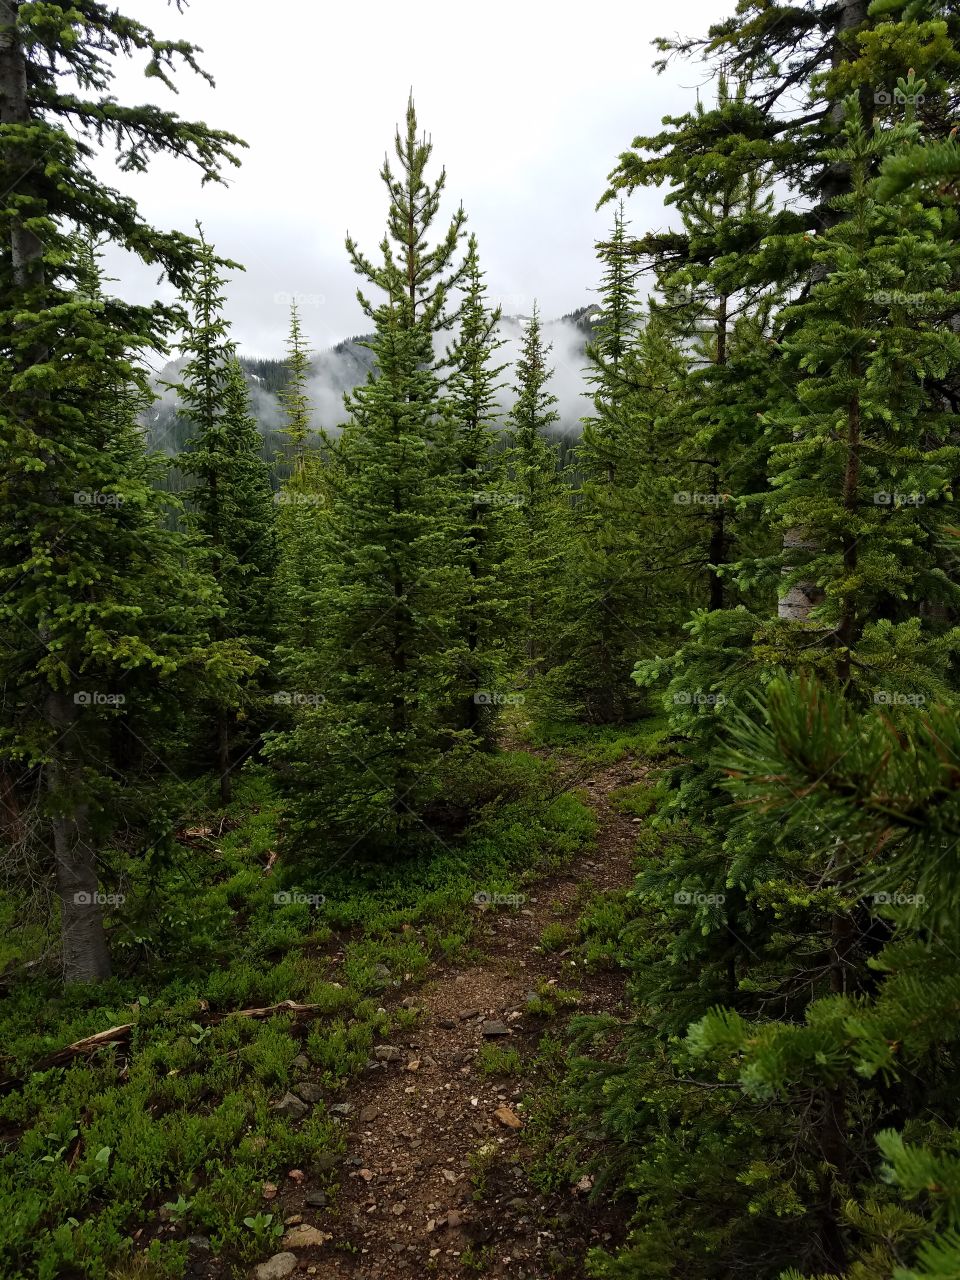 An overgrown path winds down a mountainside through an evergreen forest on a cloudy day.